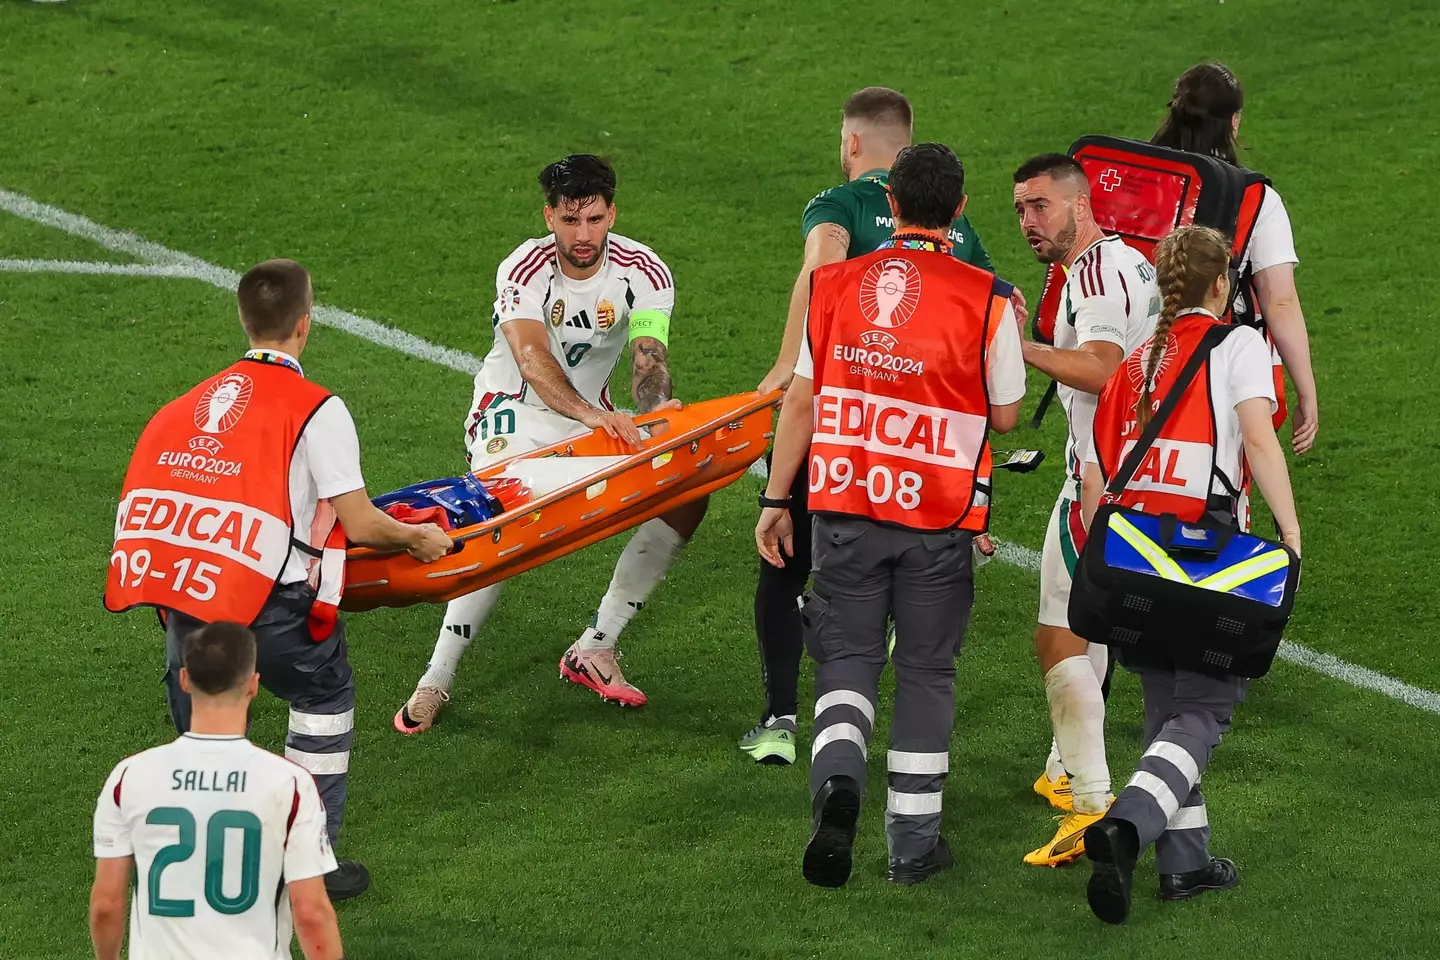 Dominik Szoboszlai assists the medical team following Barnabas Varga's incident. Image: Getty